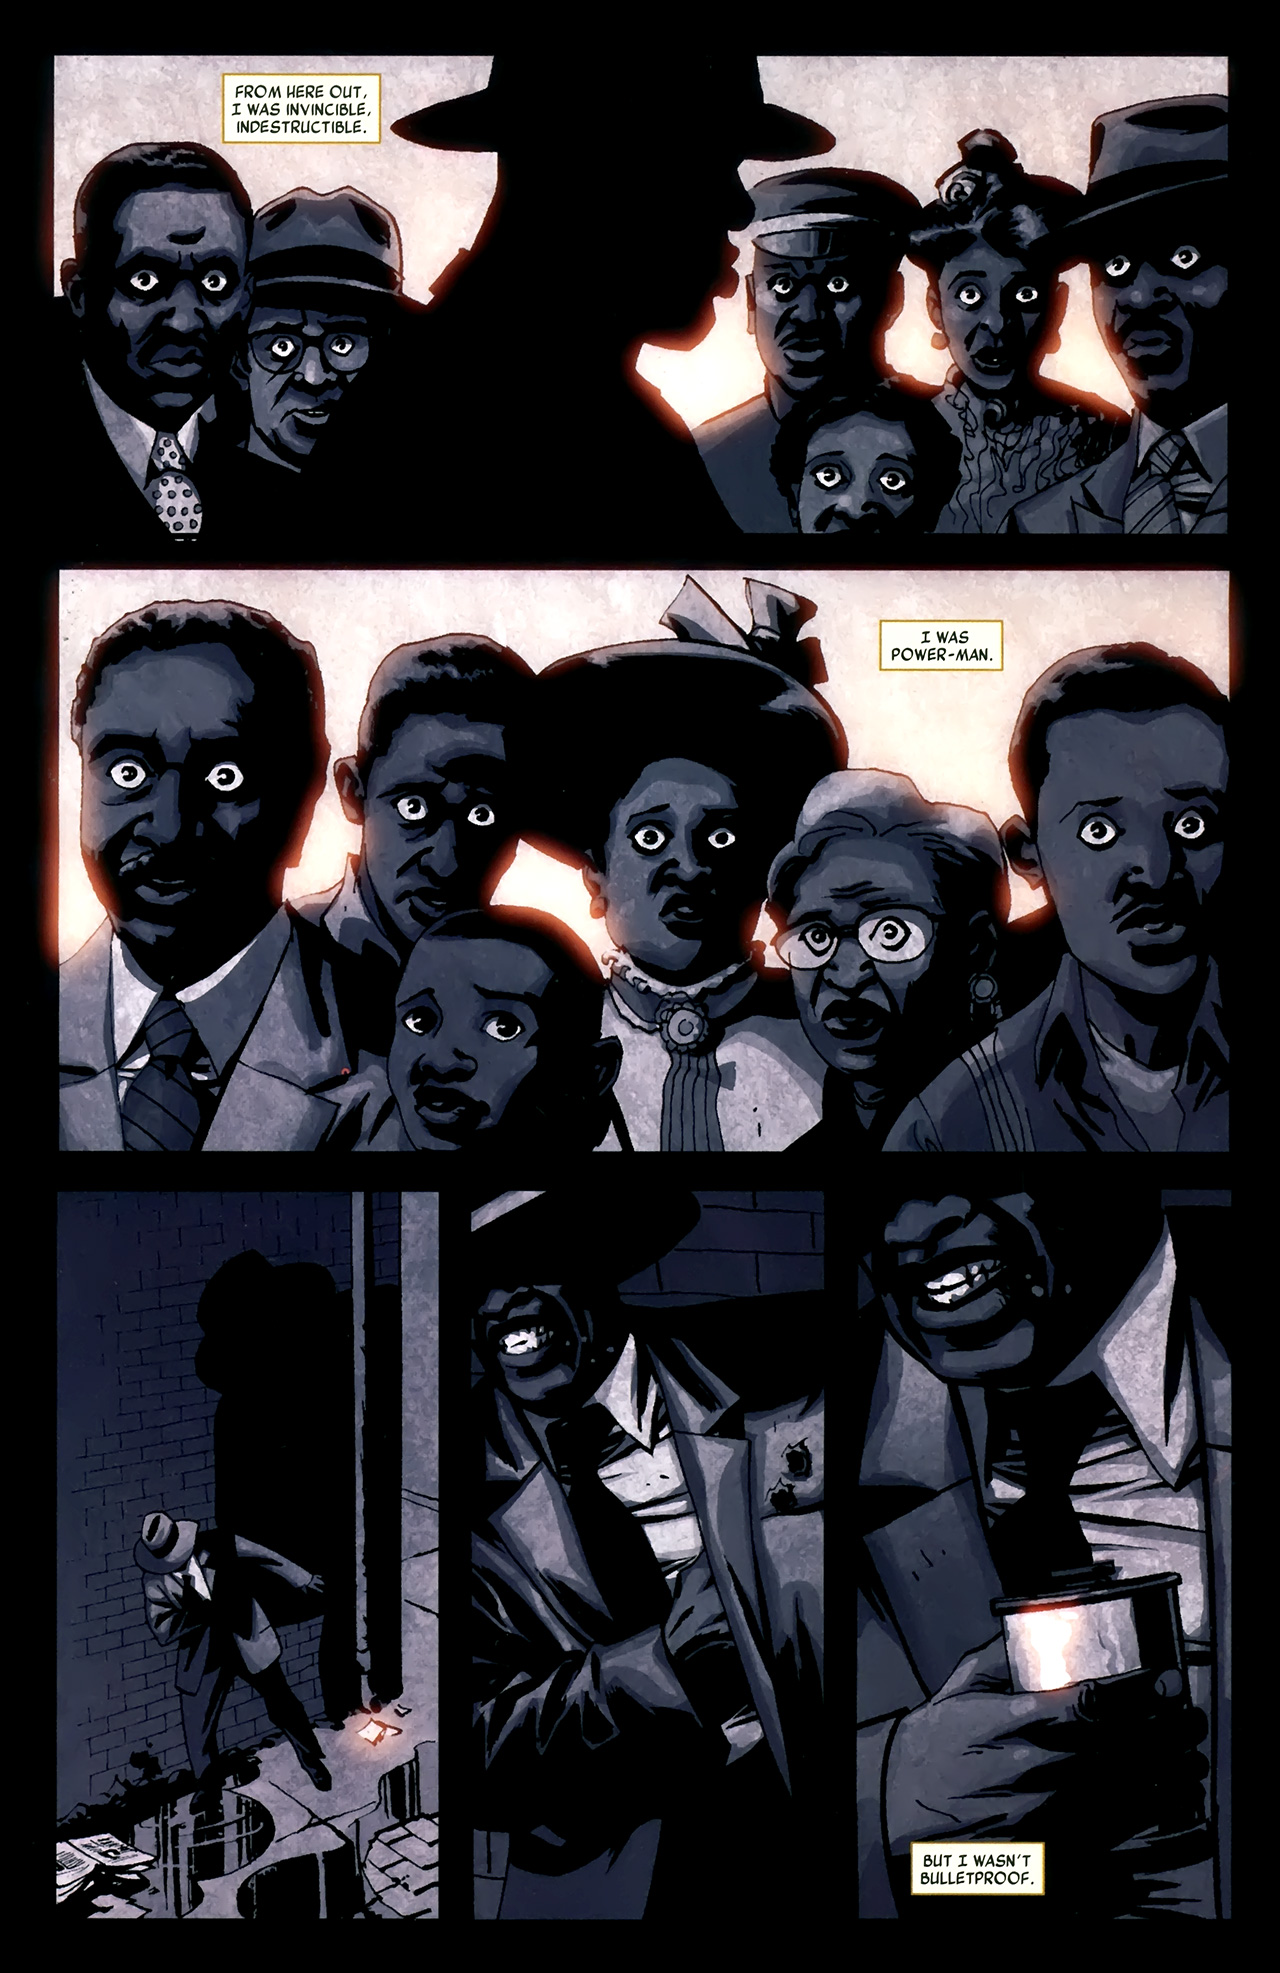 Luke Cage Noir #3 (of 4) - Moon Over Harlem, Part 3